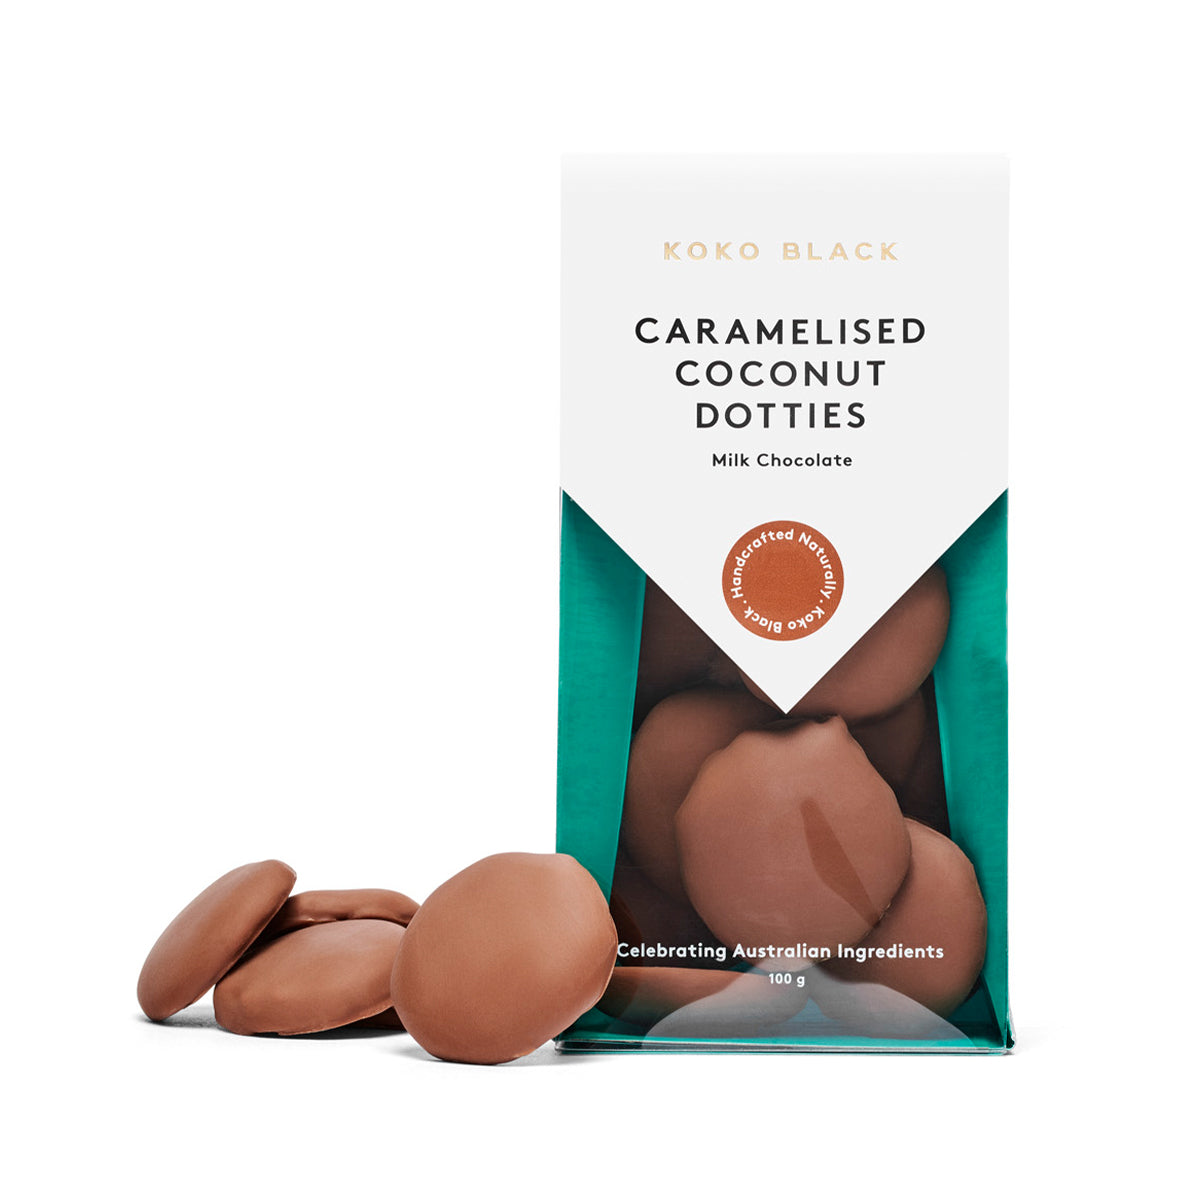 Caramelised Coconut Dotties | Milk Chocolate